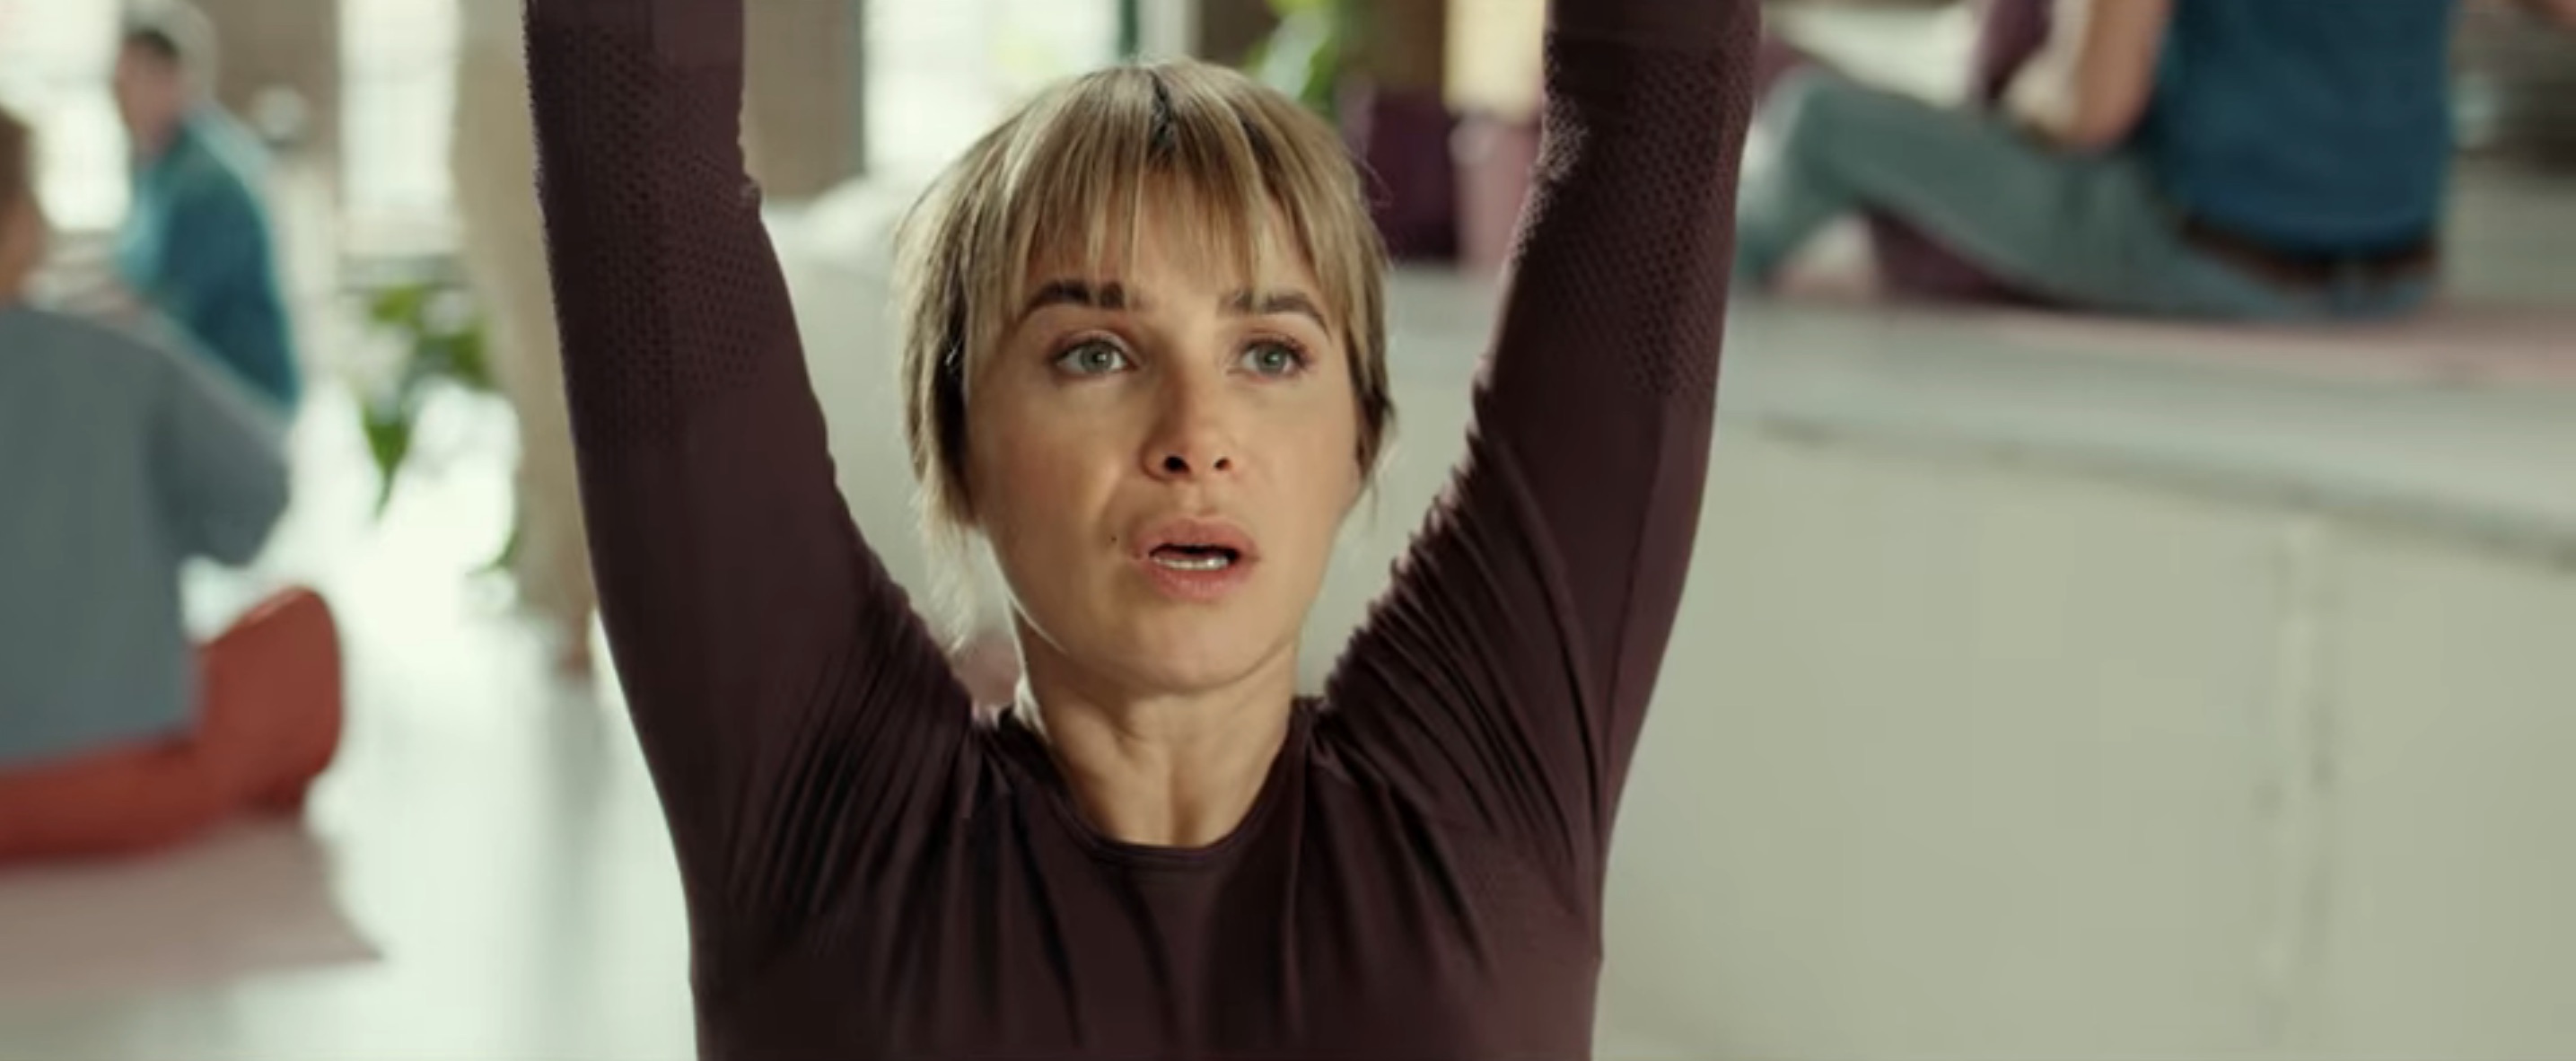 F*ck Love Too Cast on Netflix - Victoria Koblenko as Cindy